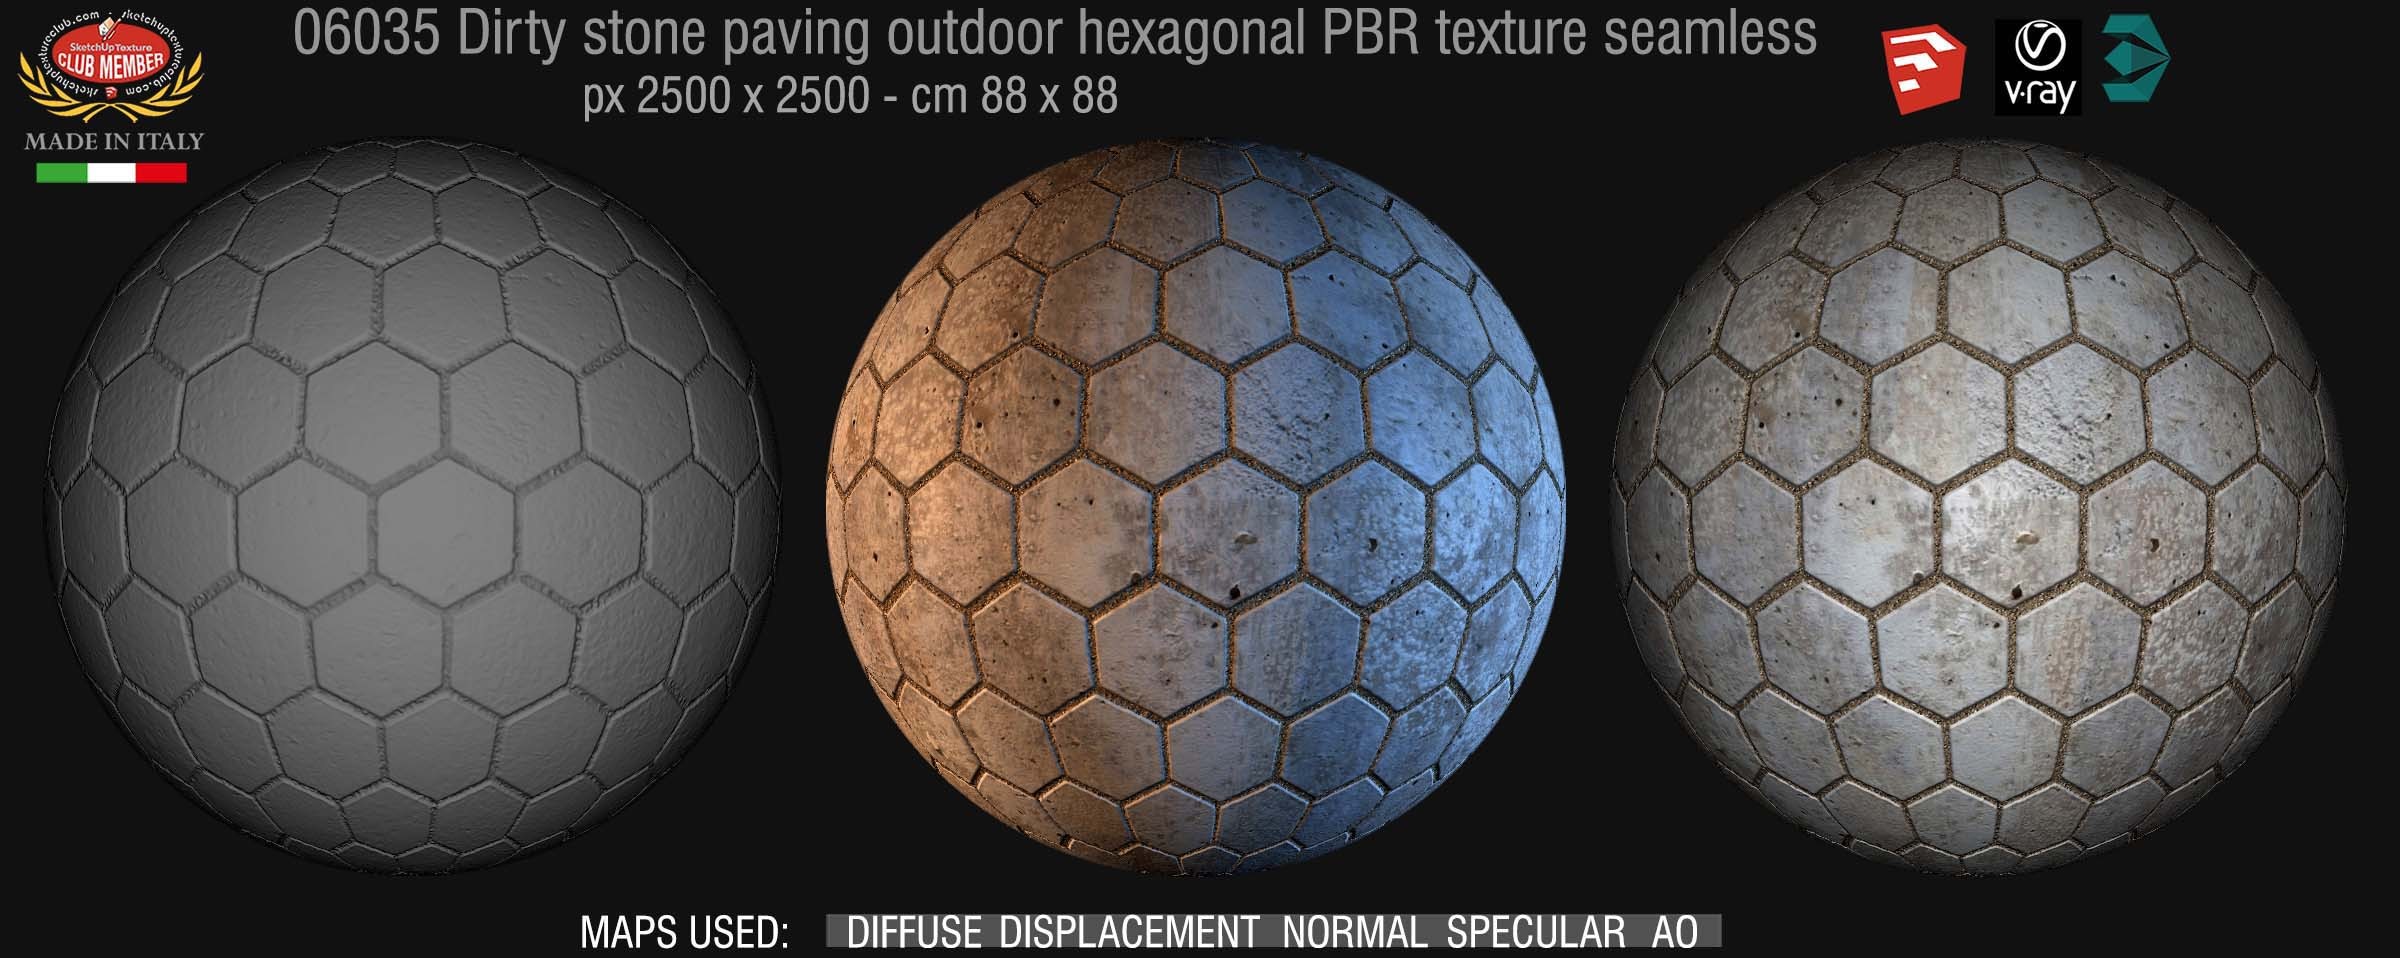 06035 Dirty stone paving outdoor hexagonal texture seamless DEMO